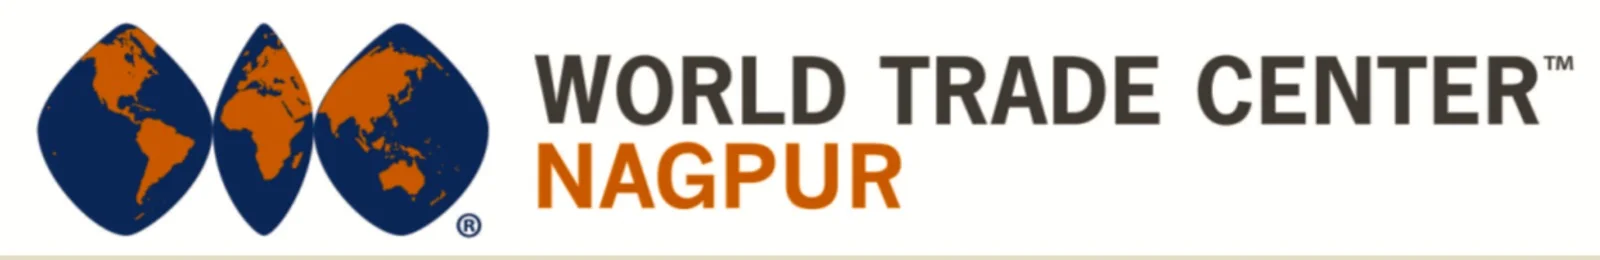 WTC Nagpur logo